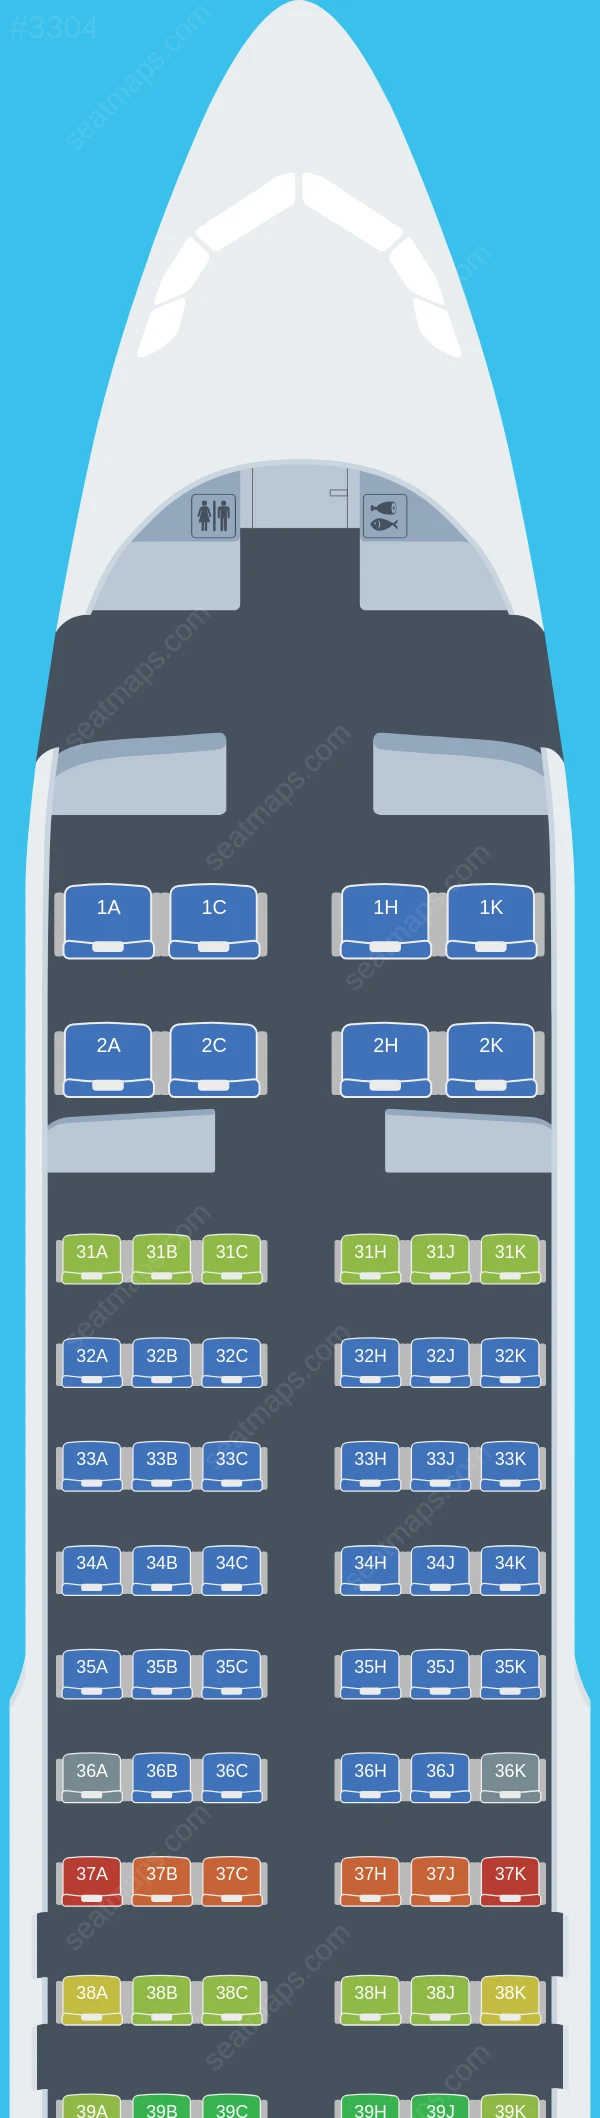 Juneyao Air Airbus A320-200 seatmap preview